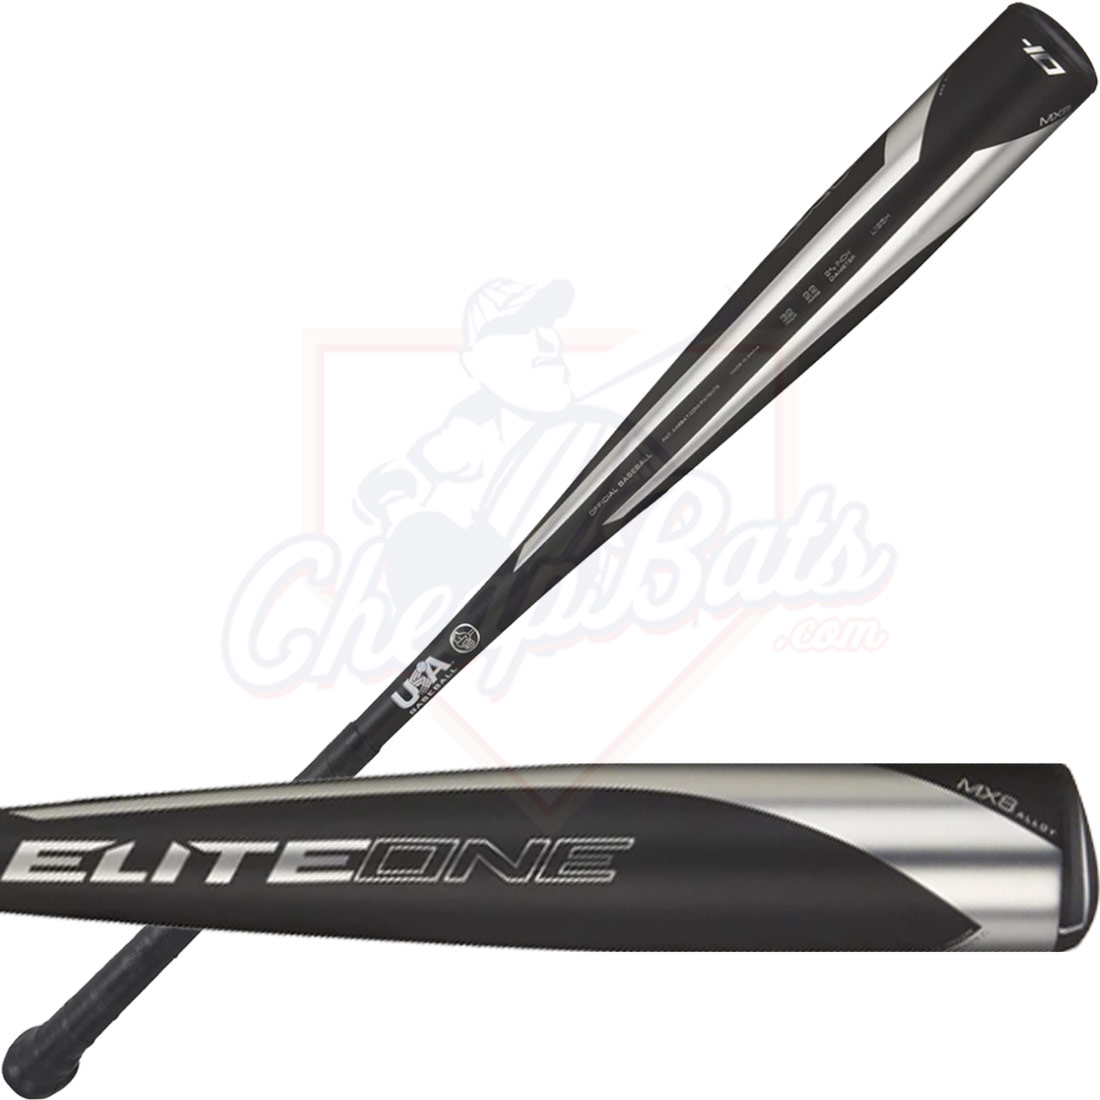 2020 Axe Elite One Youth USA Baseball Bat -10oz L185H